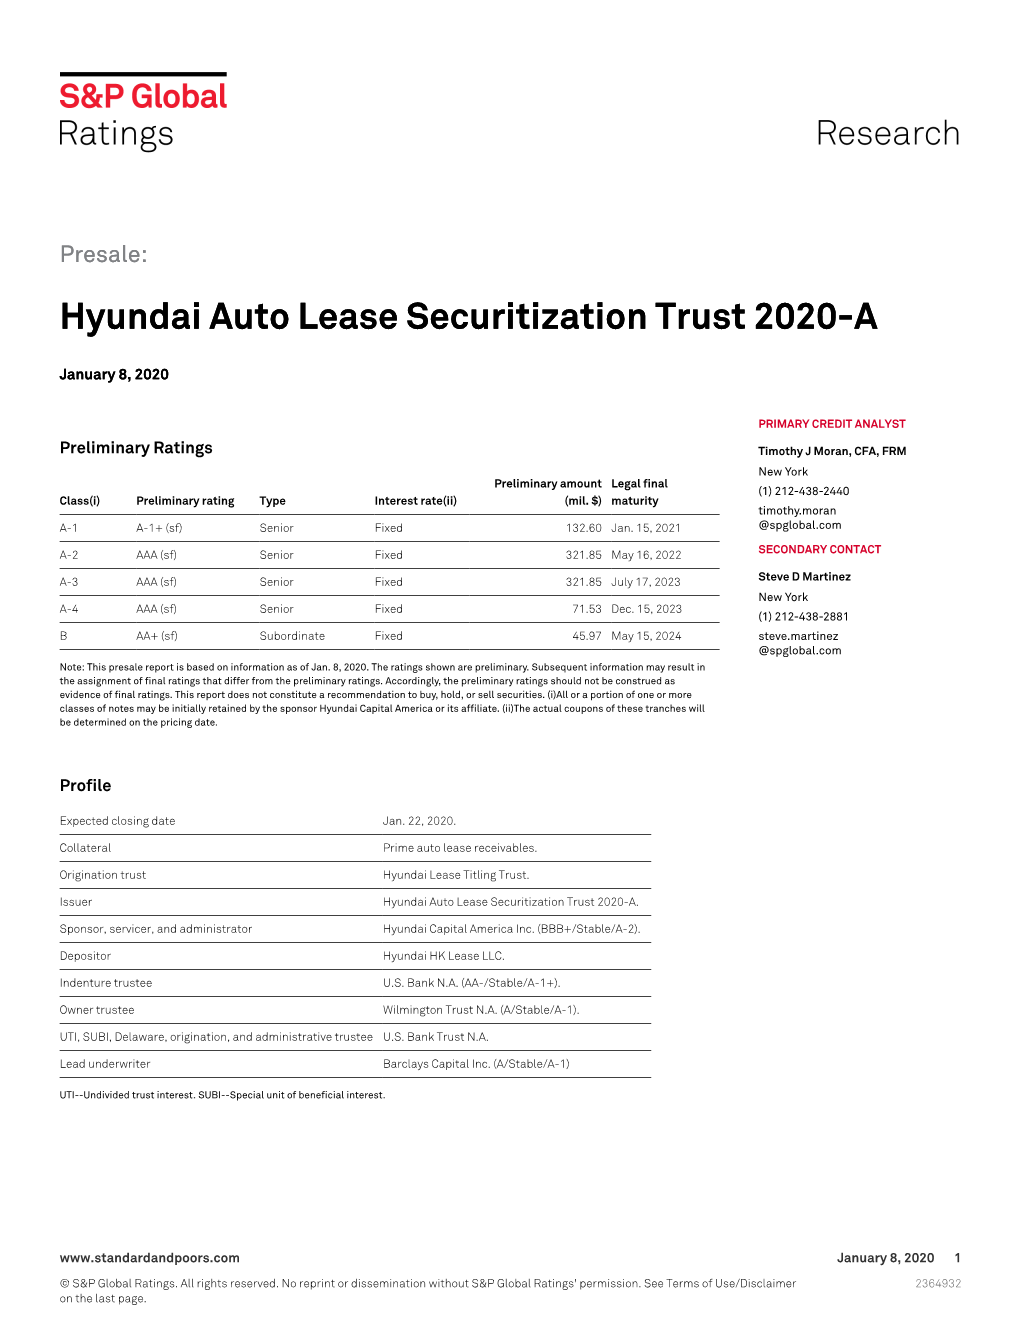 Hyundai Auto Lease Securitization Trust 2020-A